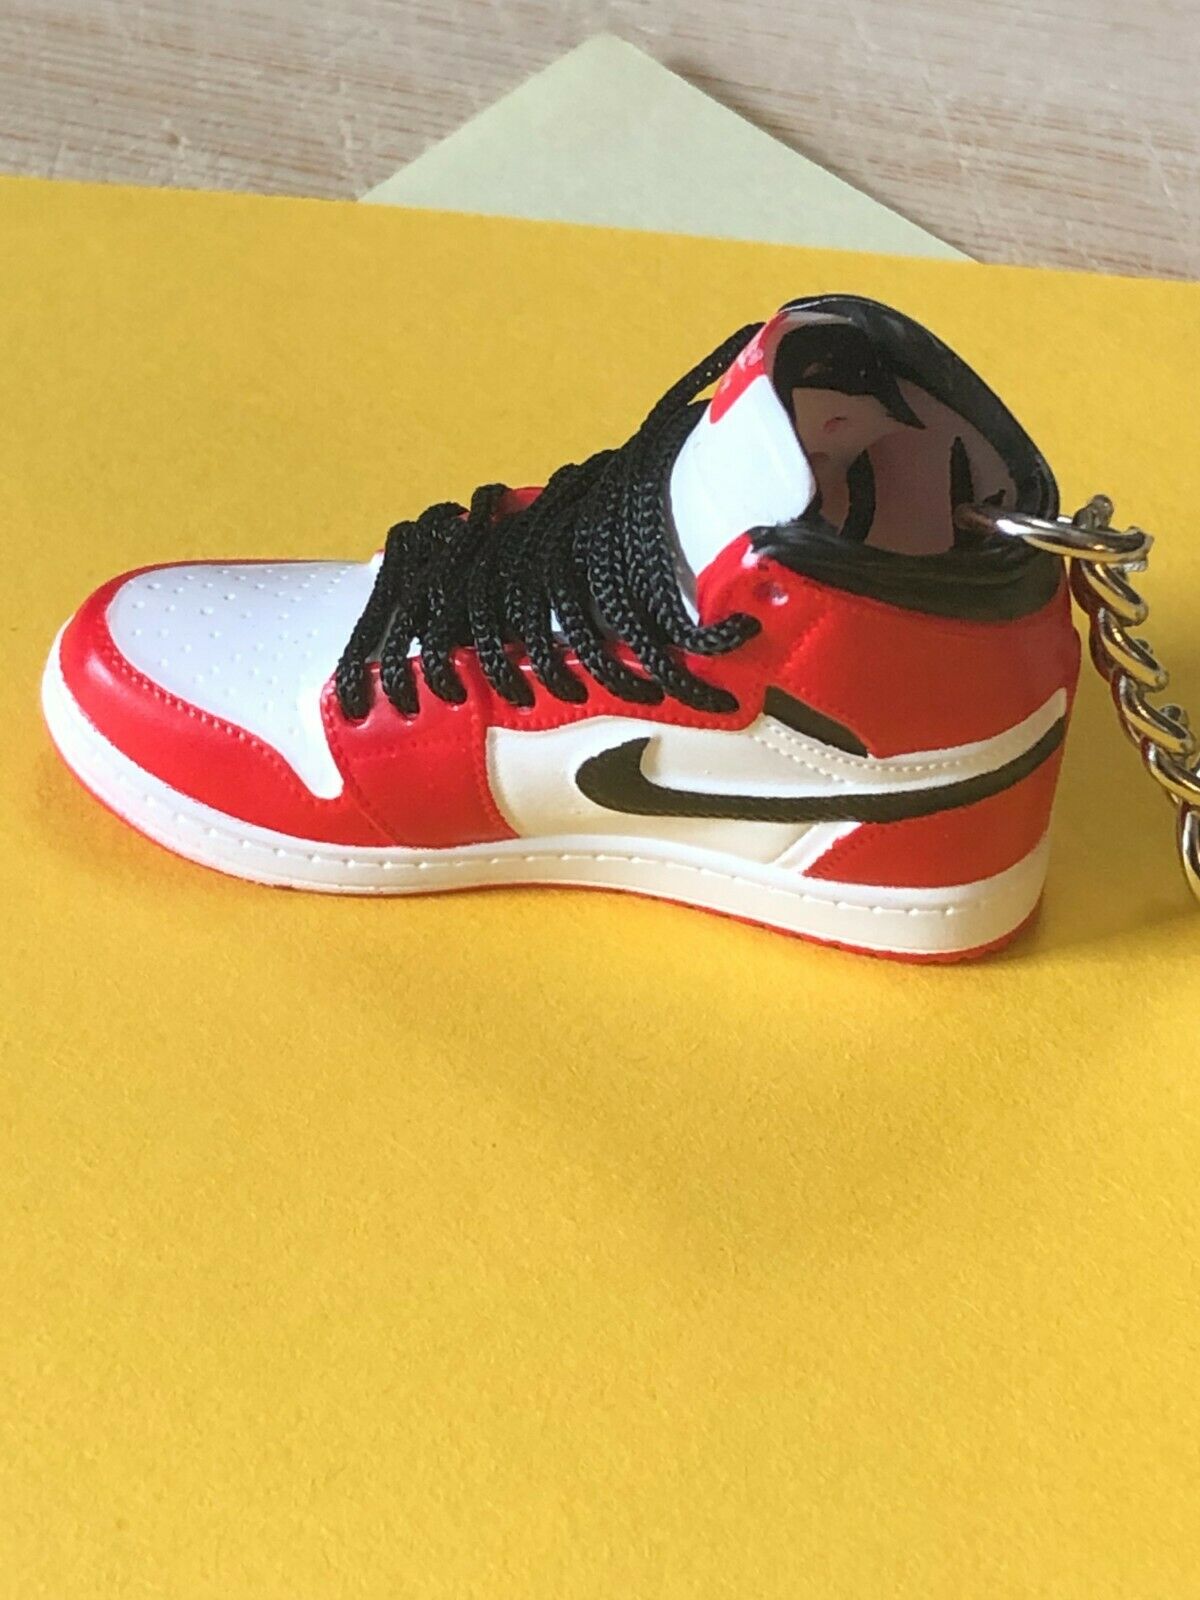 New Mini 3D AIR JORDAN Nike sneaker shoes keychain Hand-painted. Red/White/Black